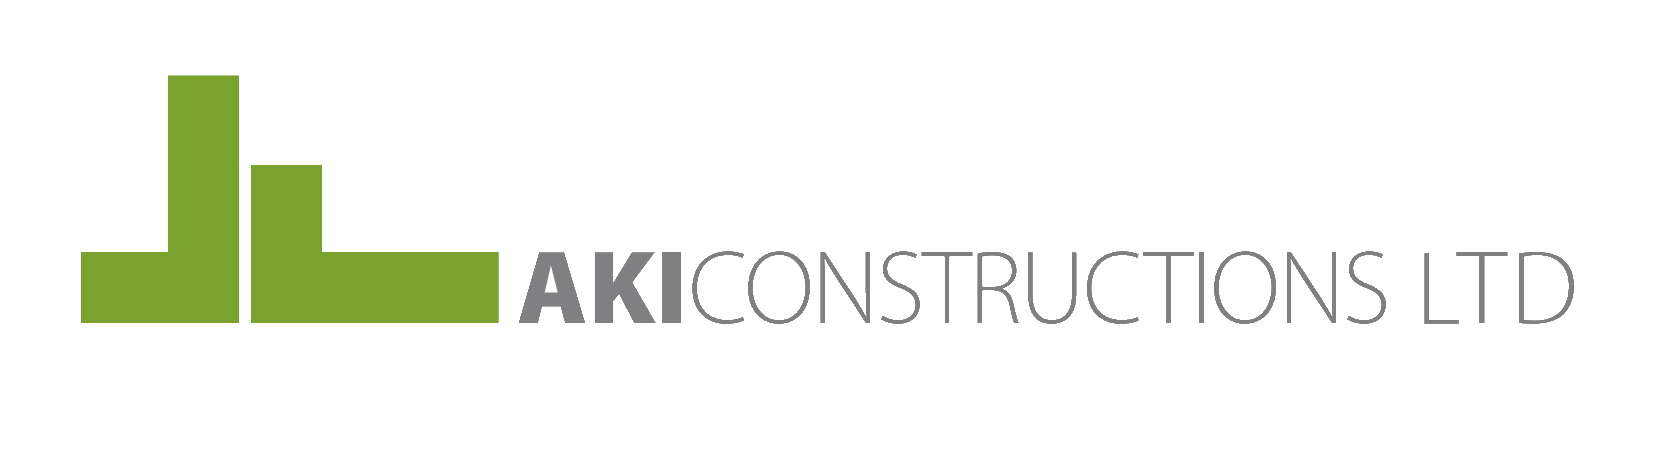 AKI CONSTRUCTIONS LTD